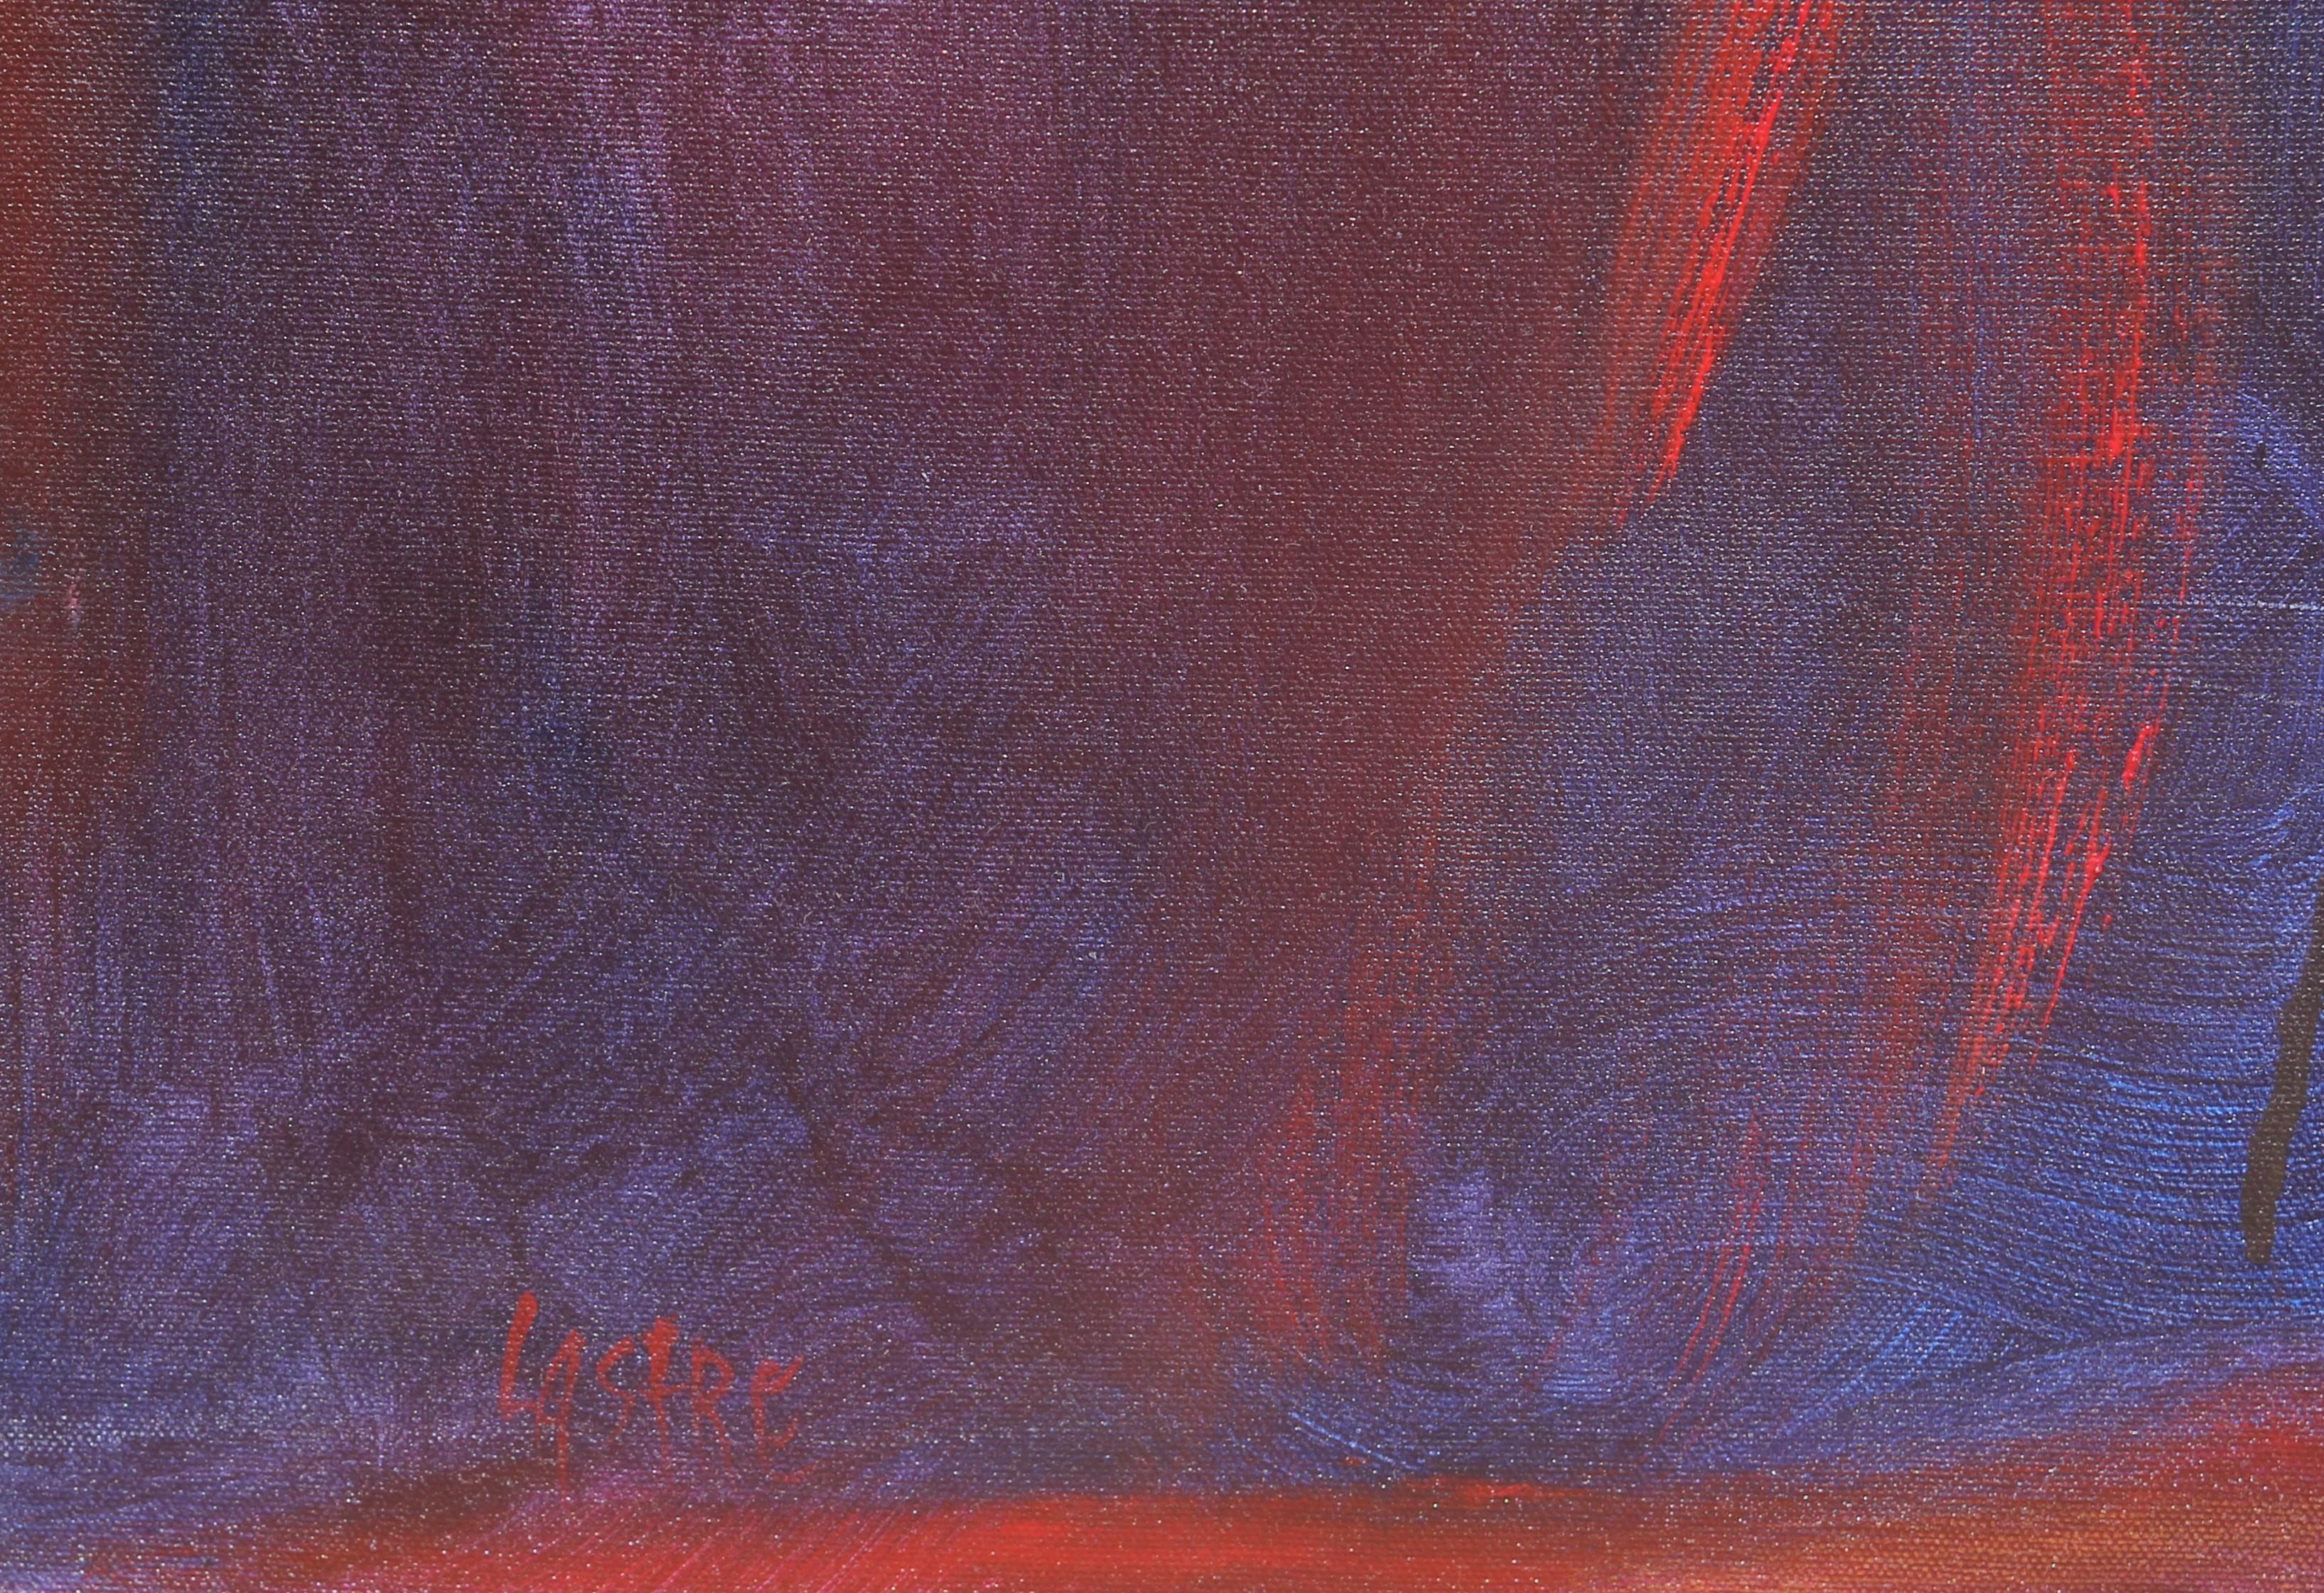 “Sounding V” Large Red, Orange, and Blue Abstract Expressionist Painting - Brown Abstract Painting by Karen Lastre